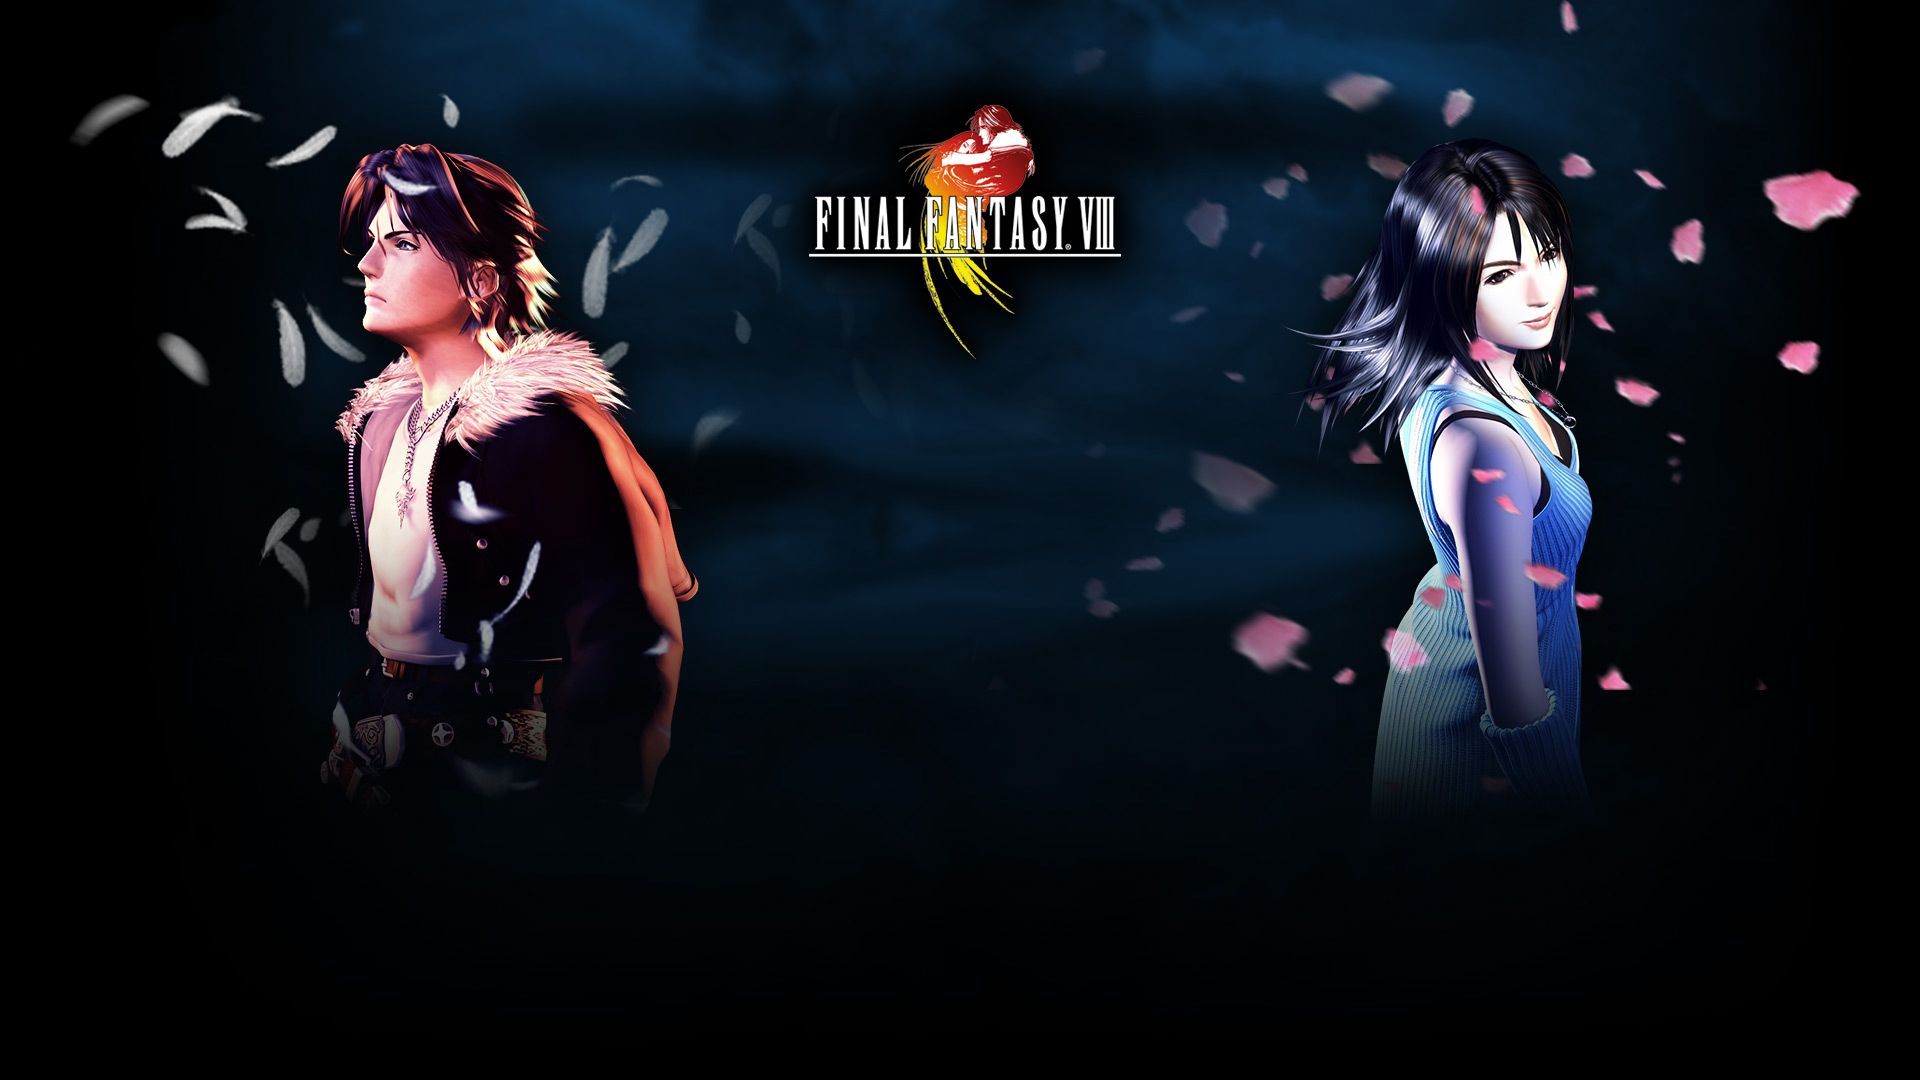 Final Fantasy VIII Wallpaper Free Final Fantasy VIII Background